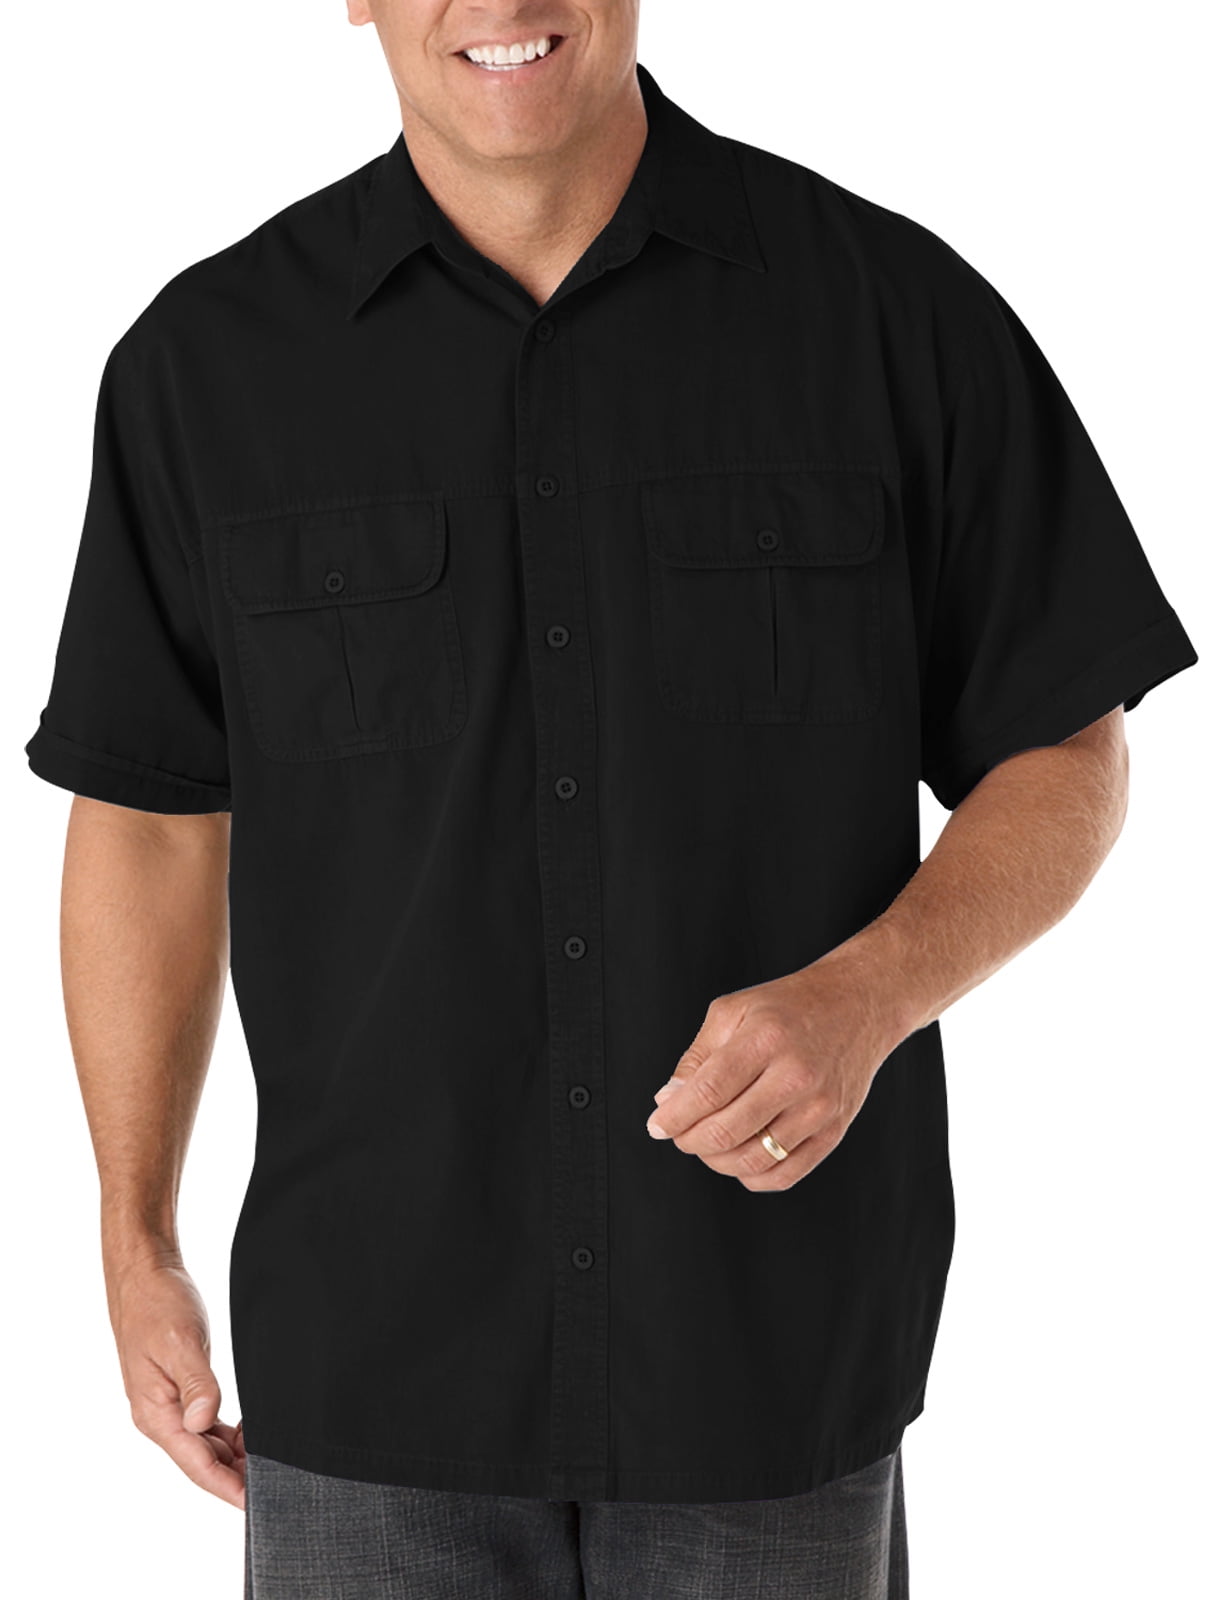 Essentials Mens Short-Sleeve Pocket Oxford Shirt fit by DXL 